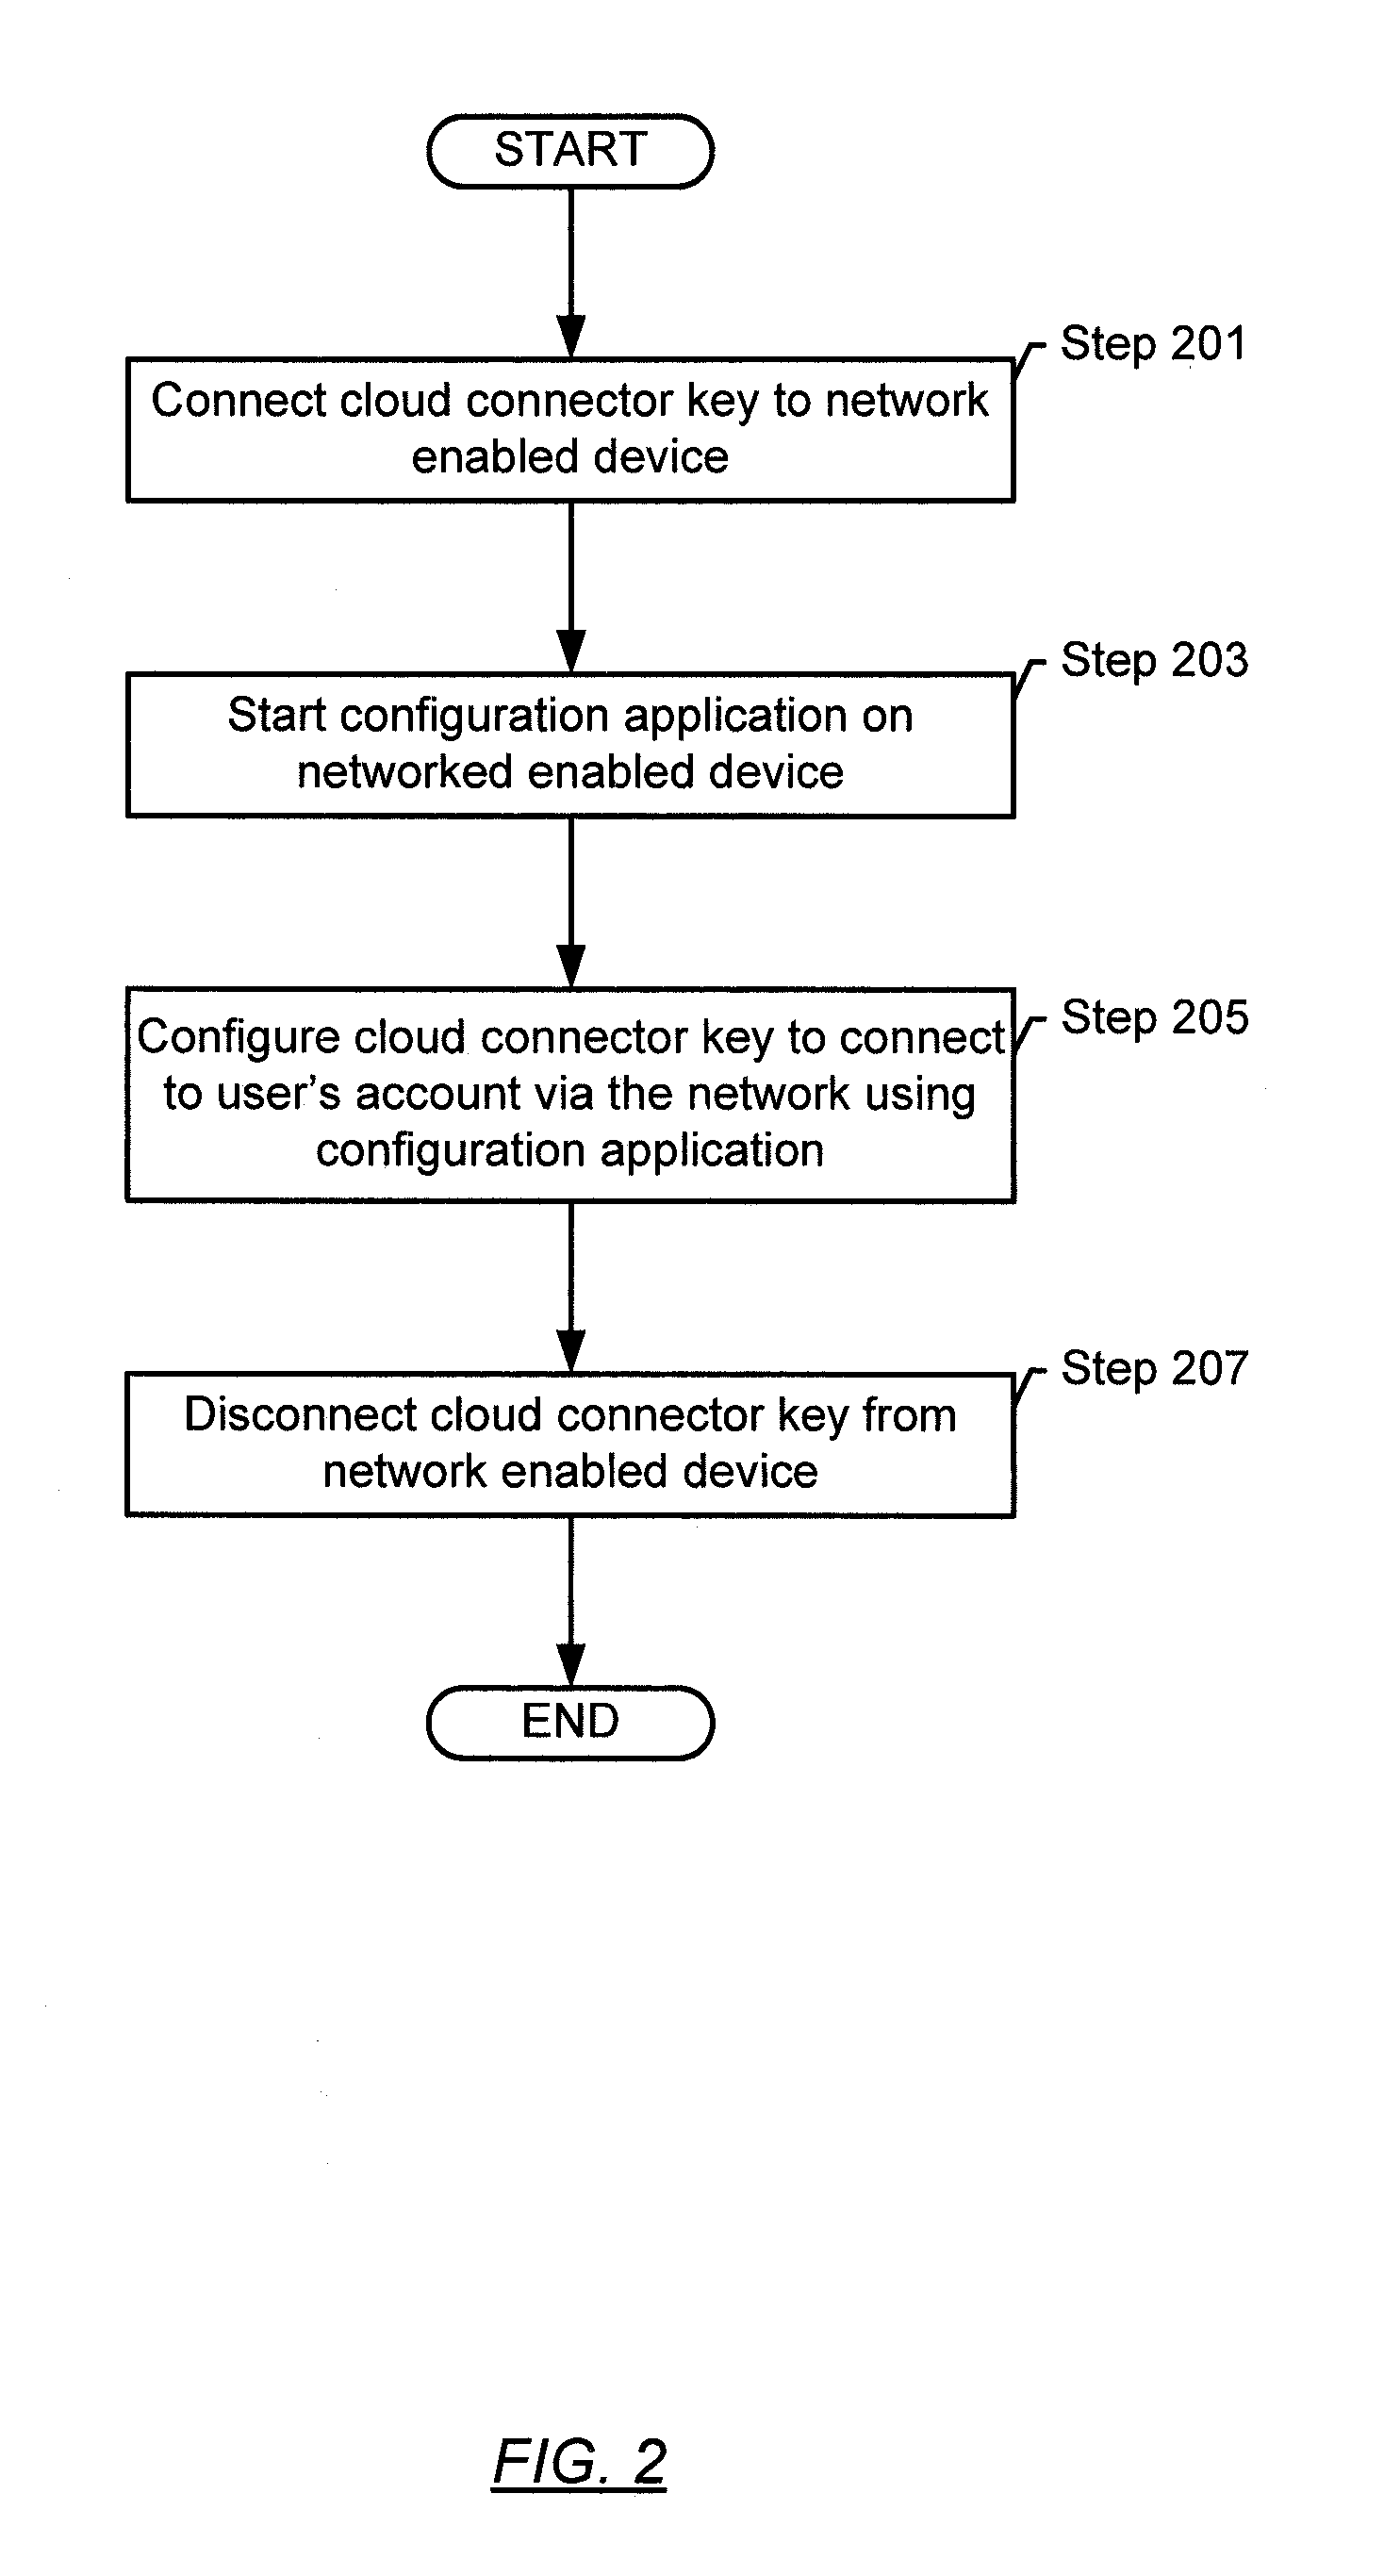 Cloud connector key